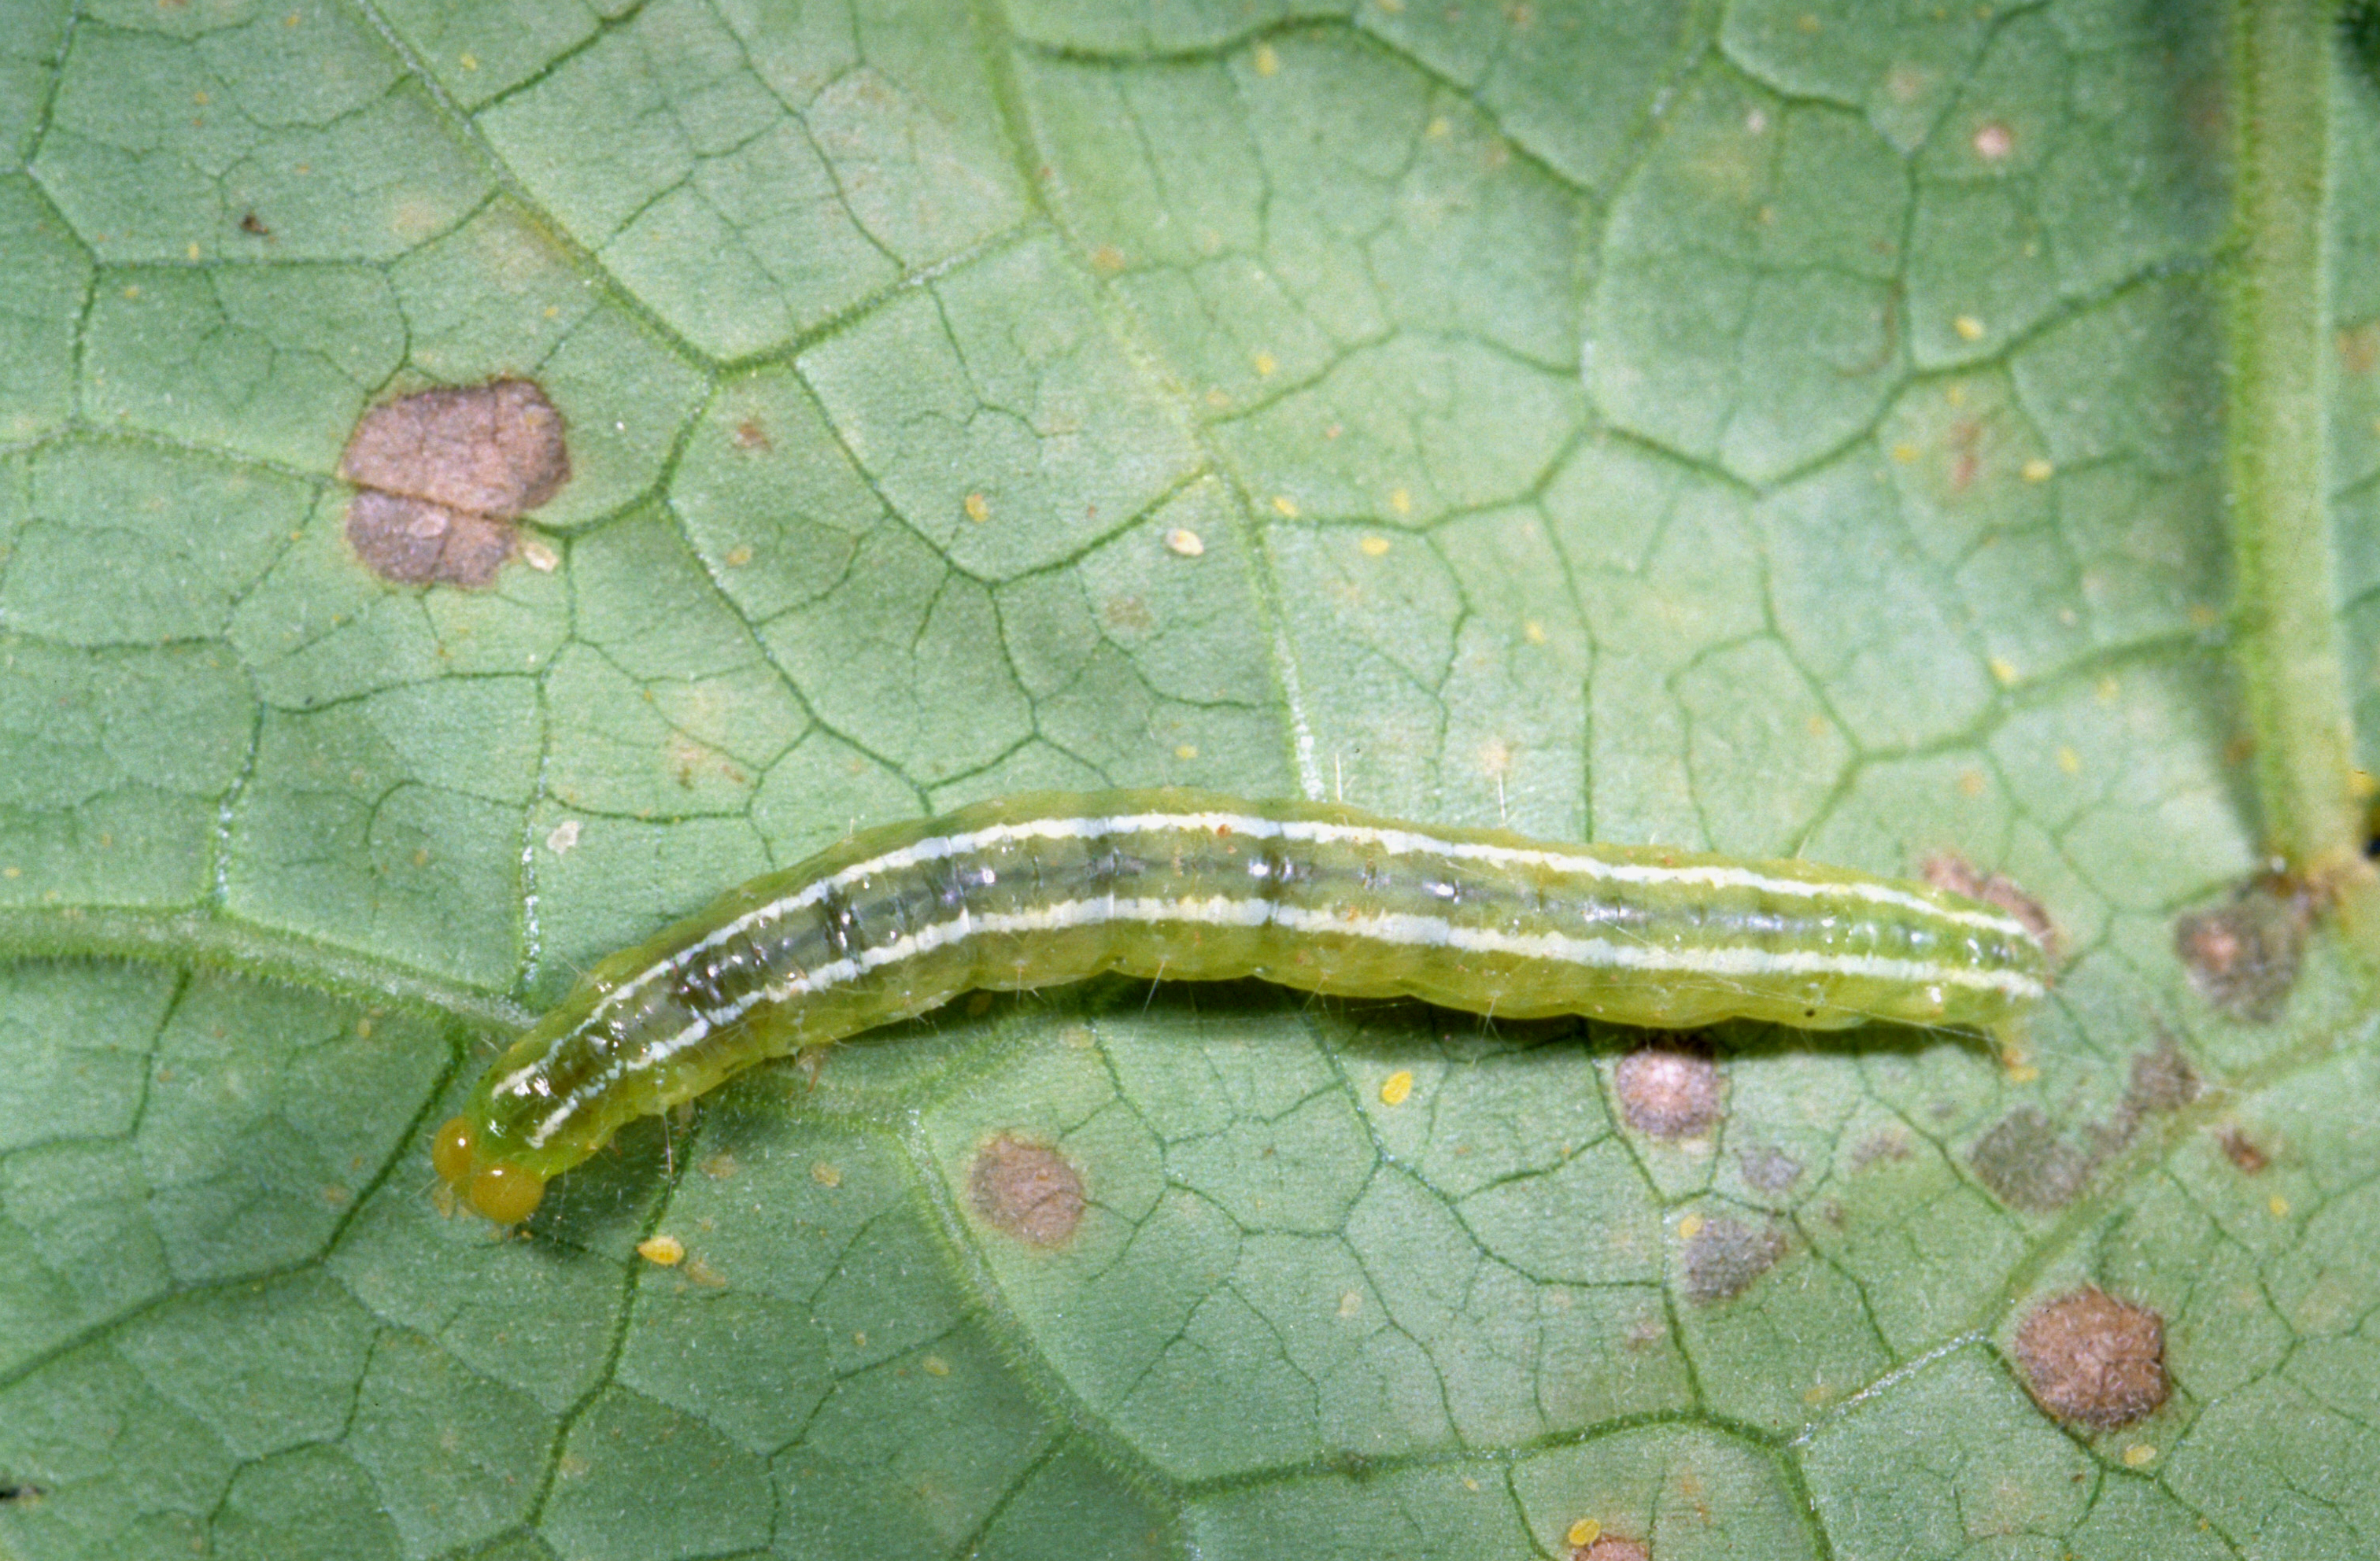 Melonworm larva.